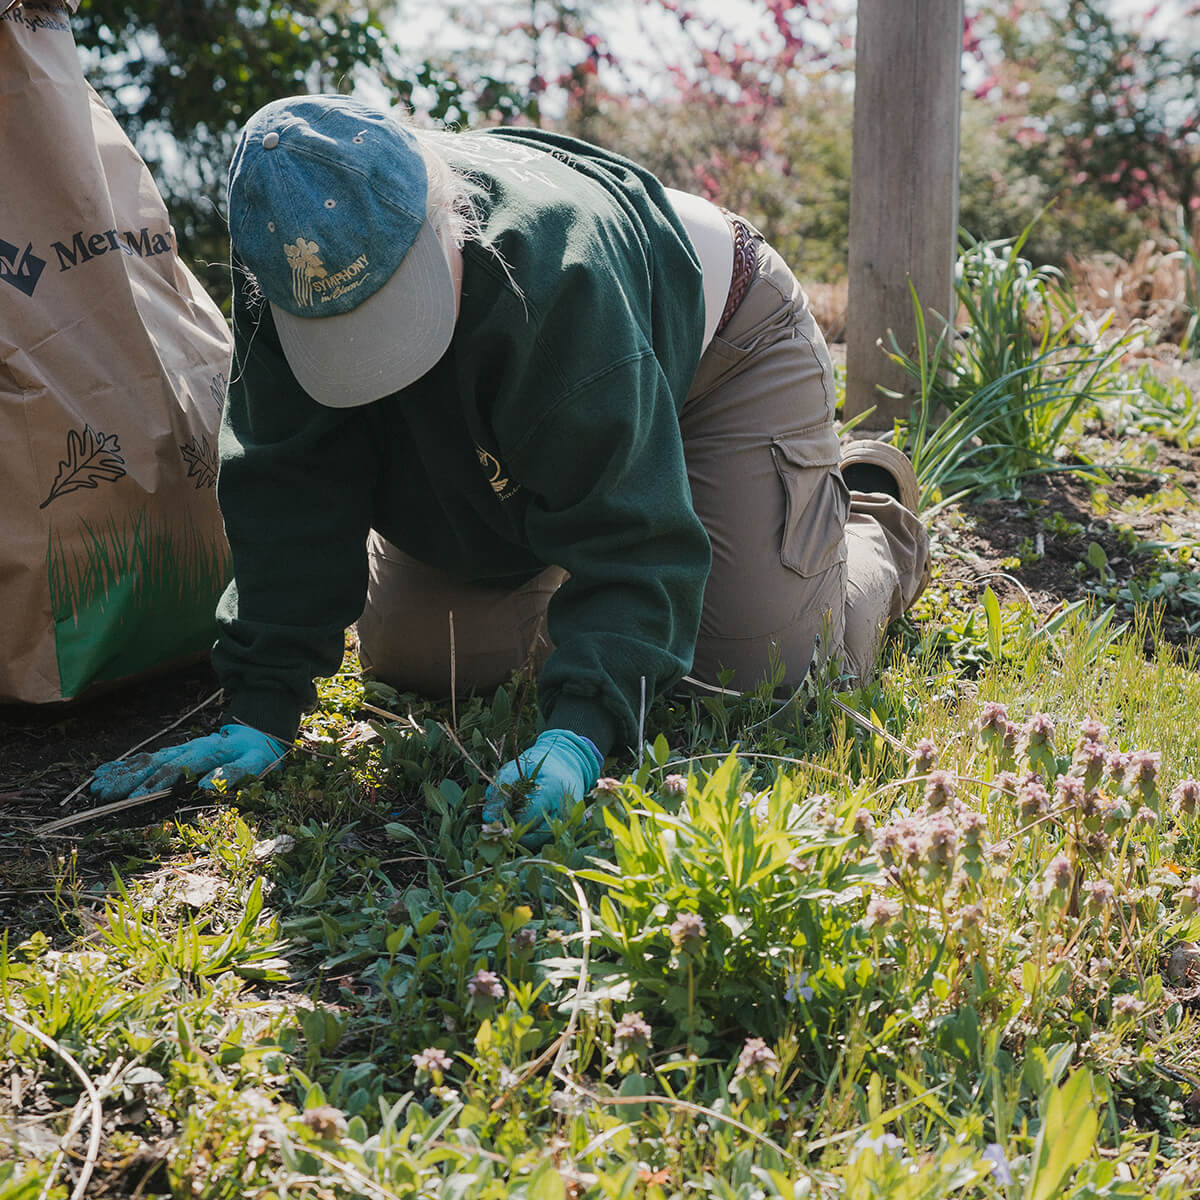 A volunteer at Wonderlab Bloomington is on the ground pulling weeds